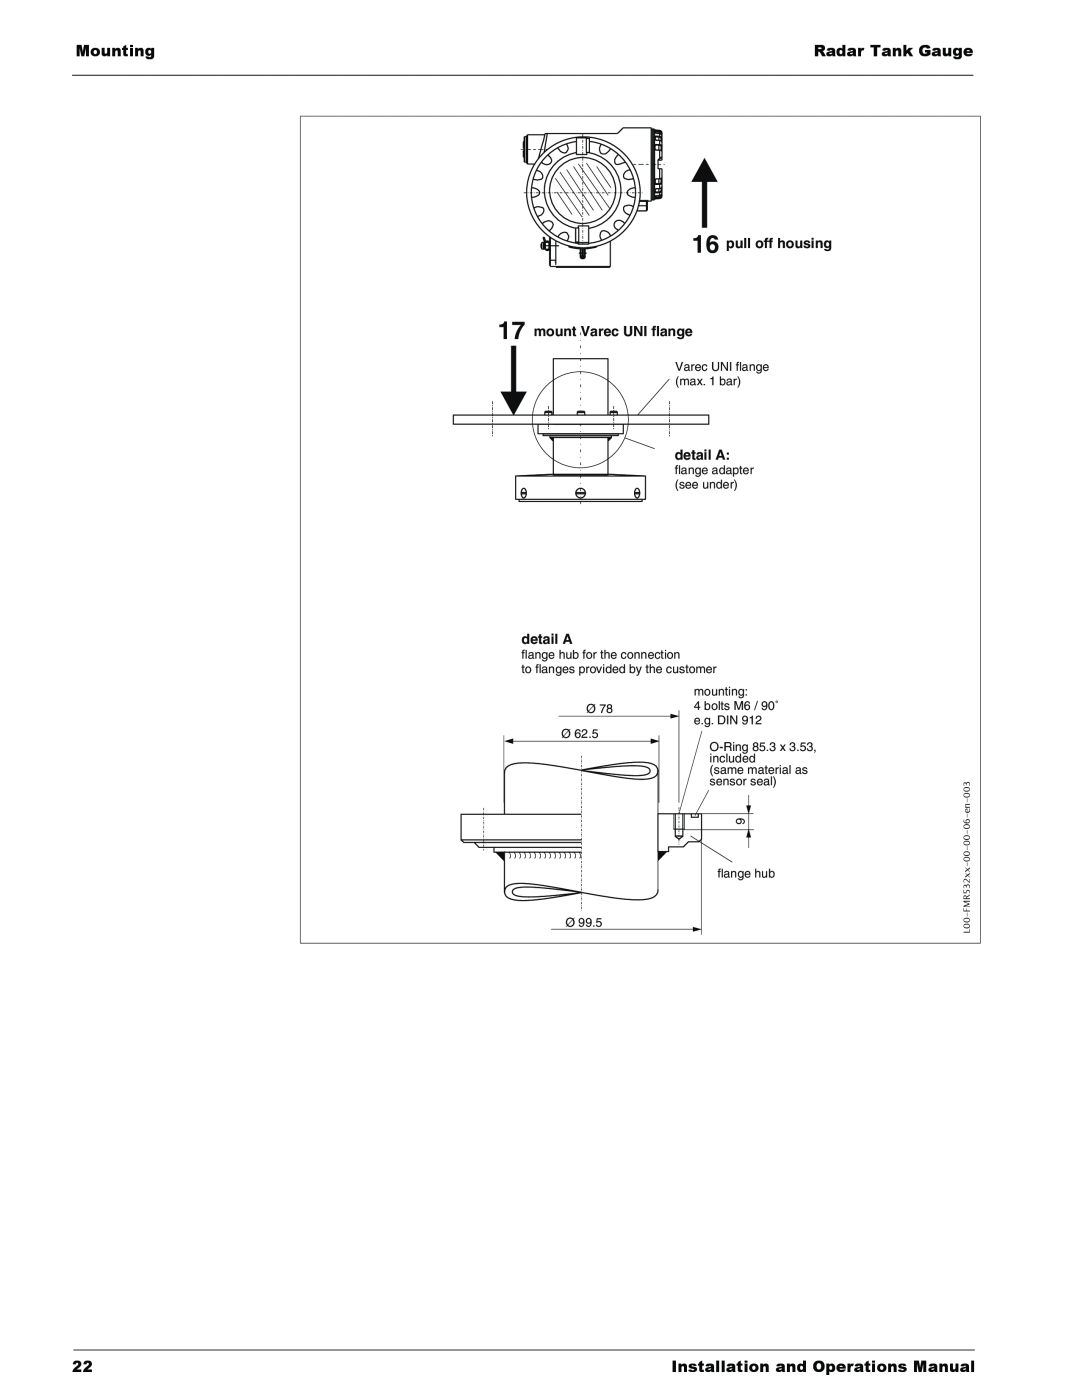 Lightning Audio 7532 manual Mounting, Radar Tank Gauge, Installation and Operations Manual, detail A 